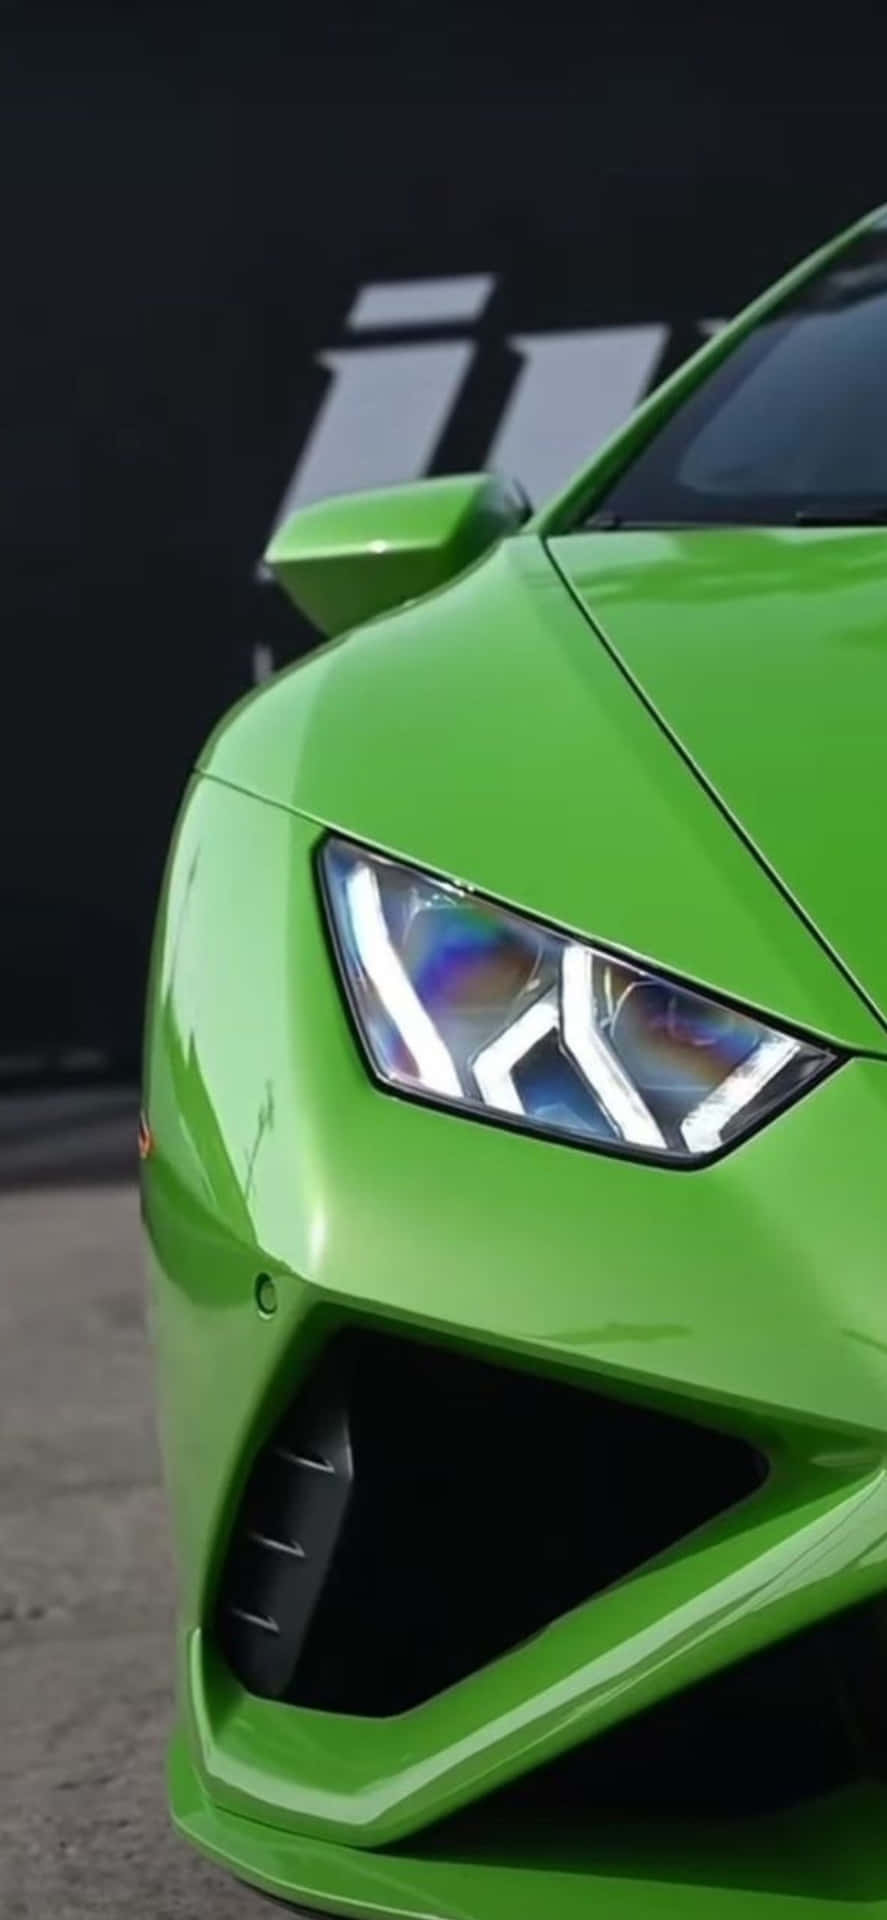 iPhone XS Max Lamborghini Green Background